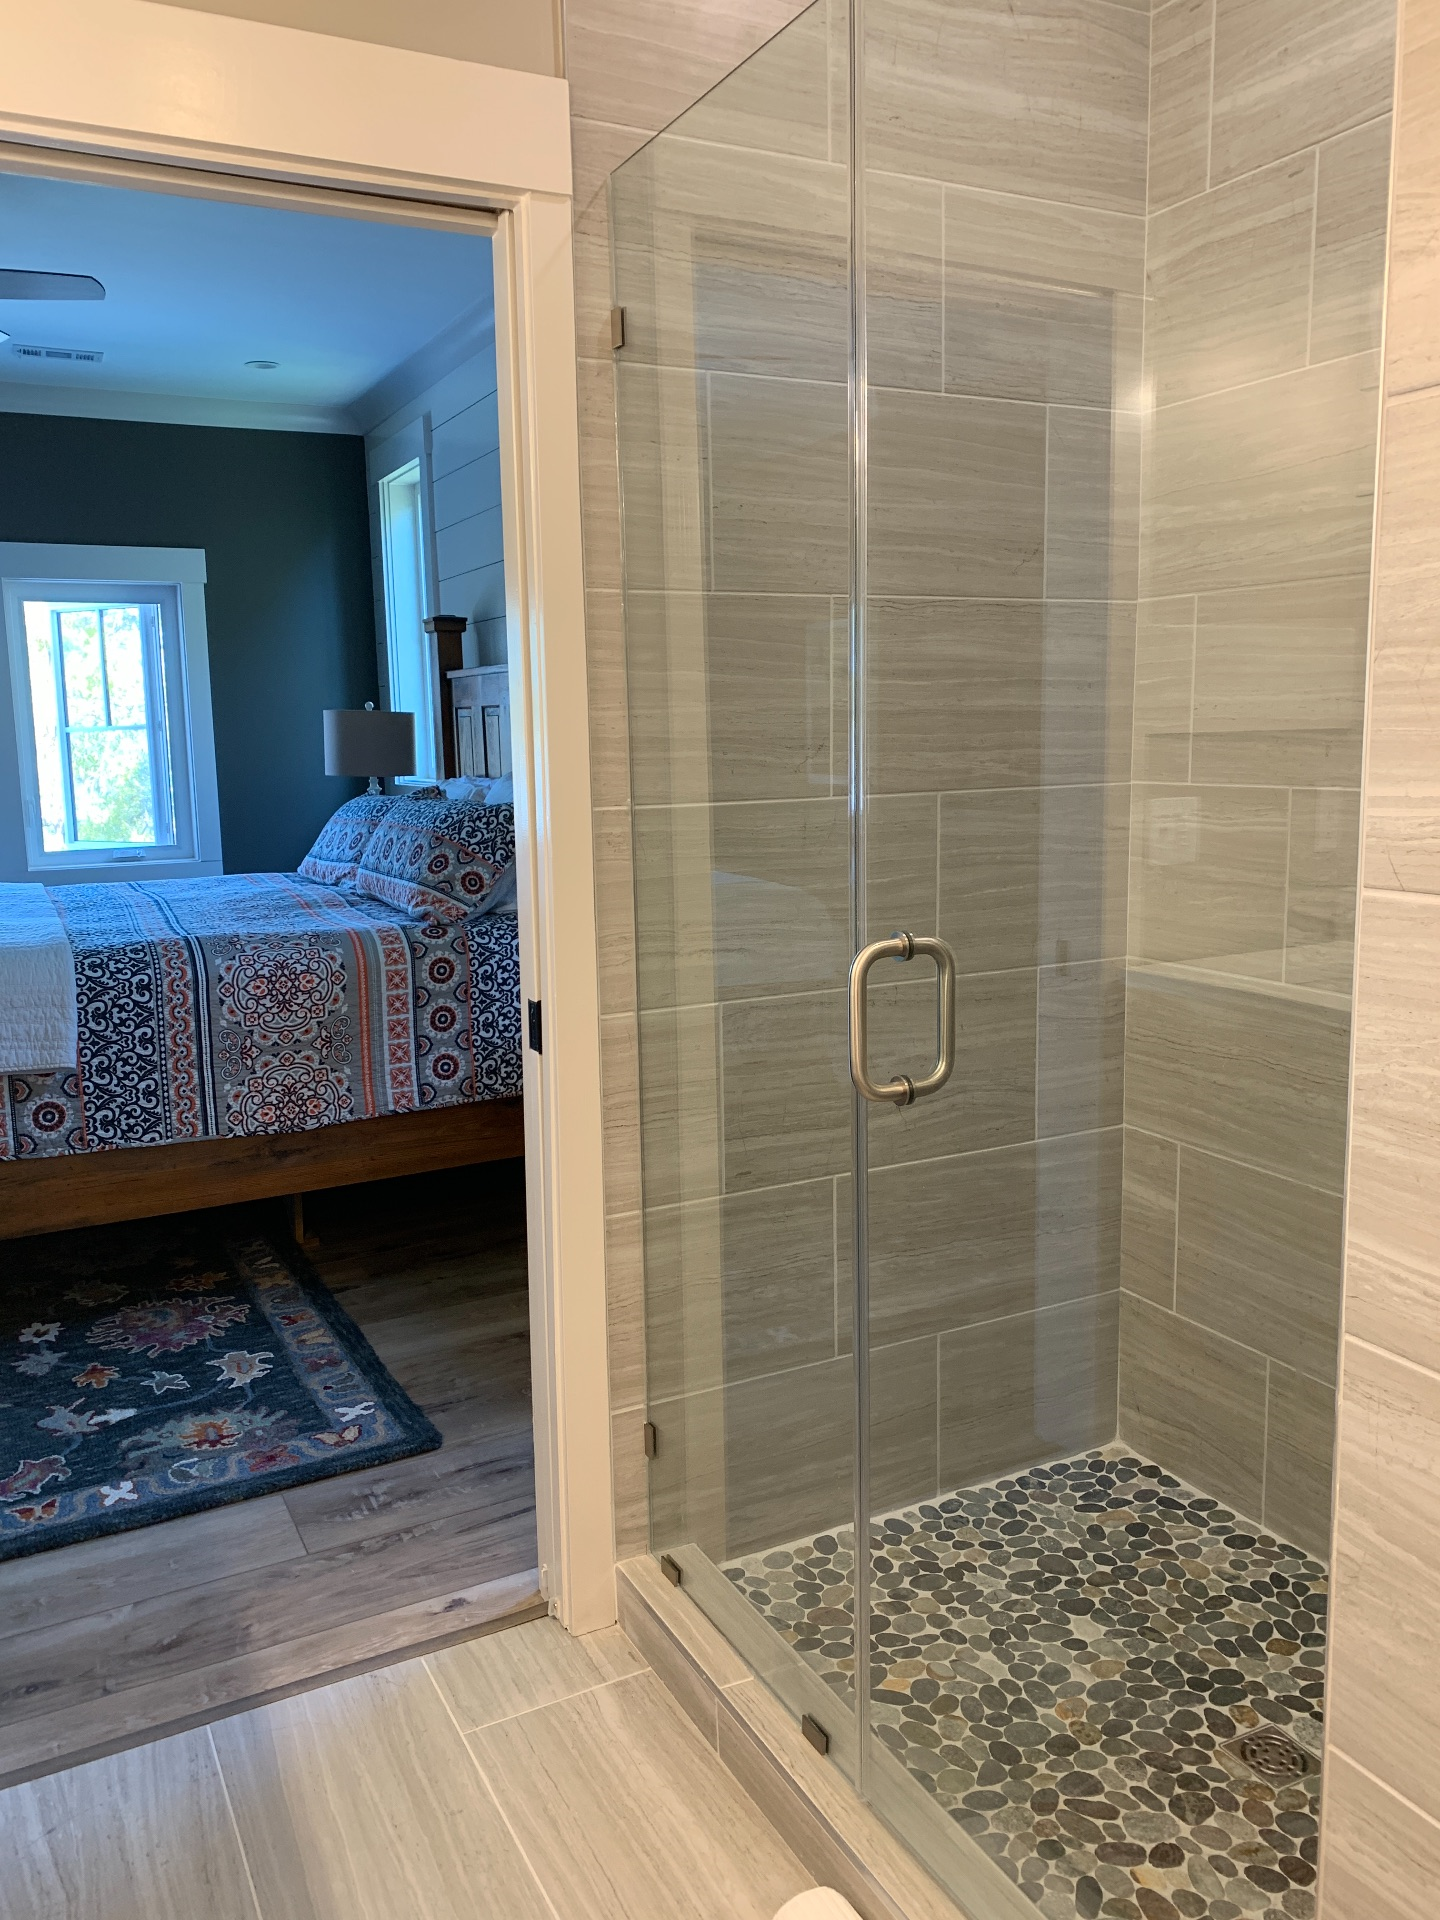 Master bedroom private bath - shower